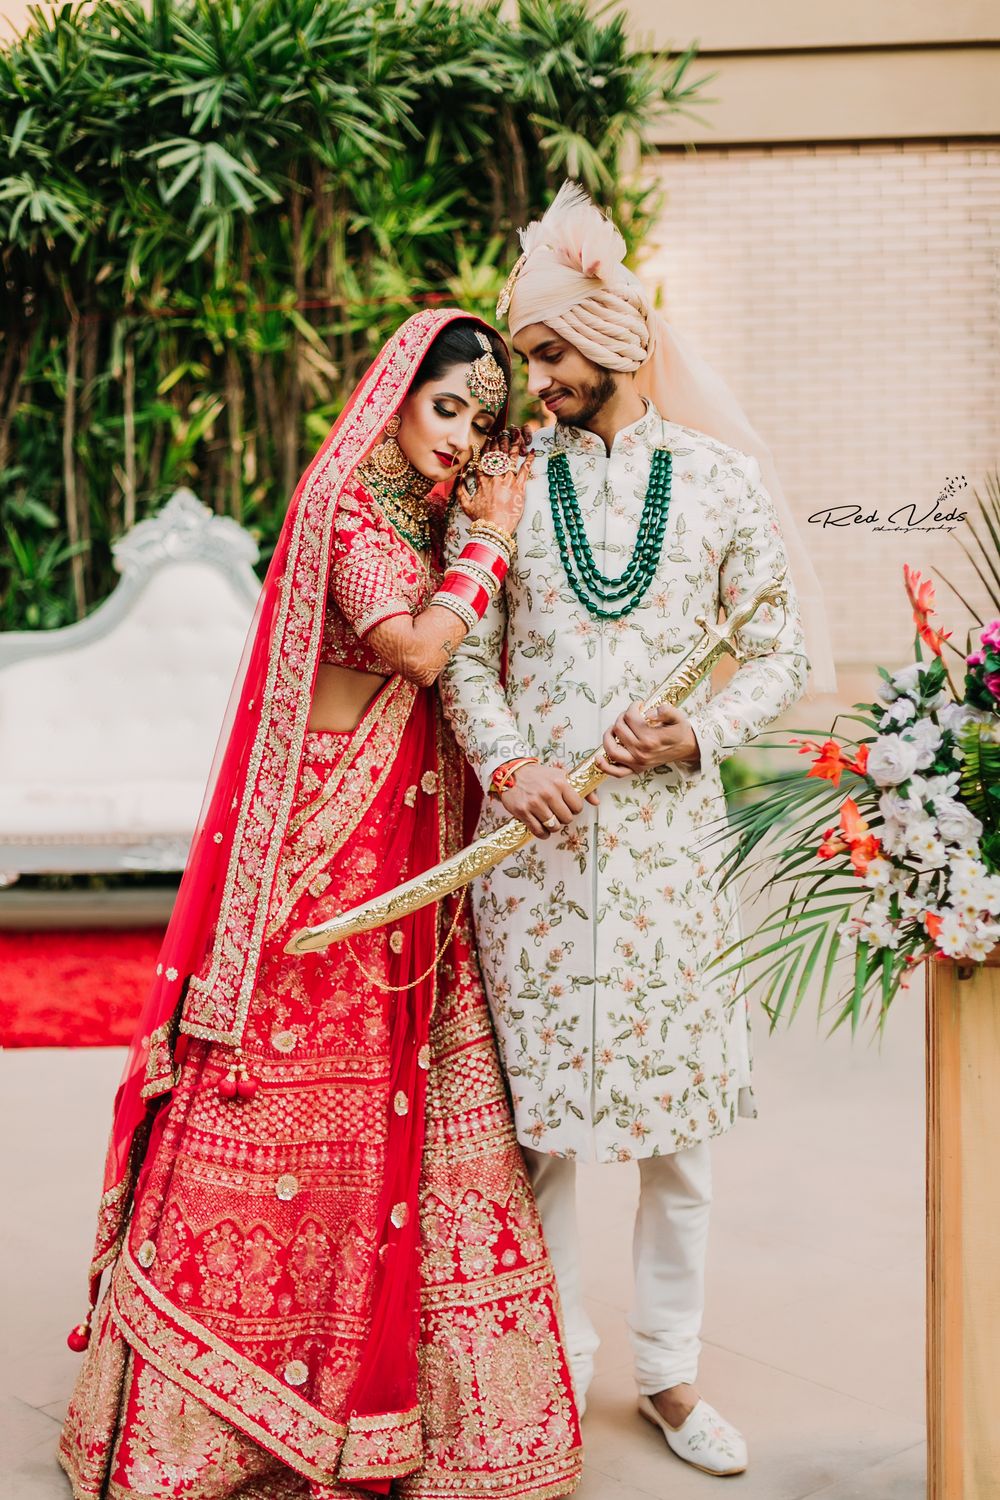 Photo from Mandy & Arun Wedding